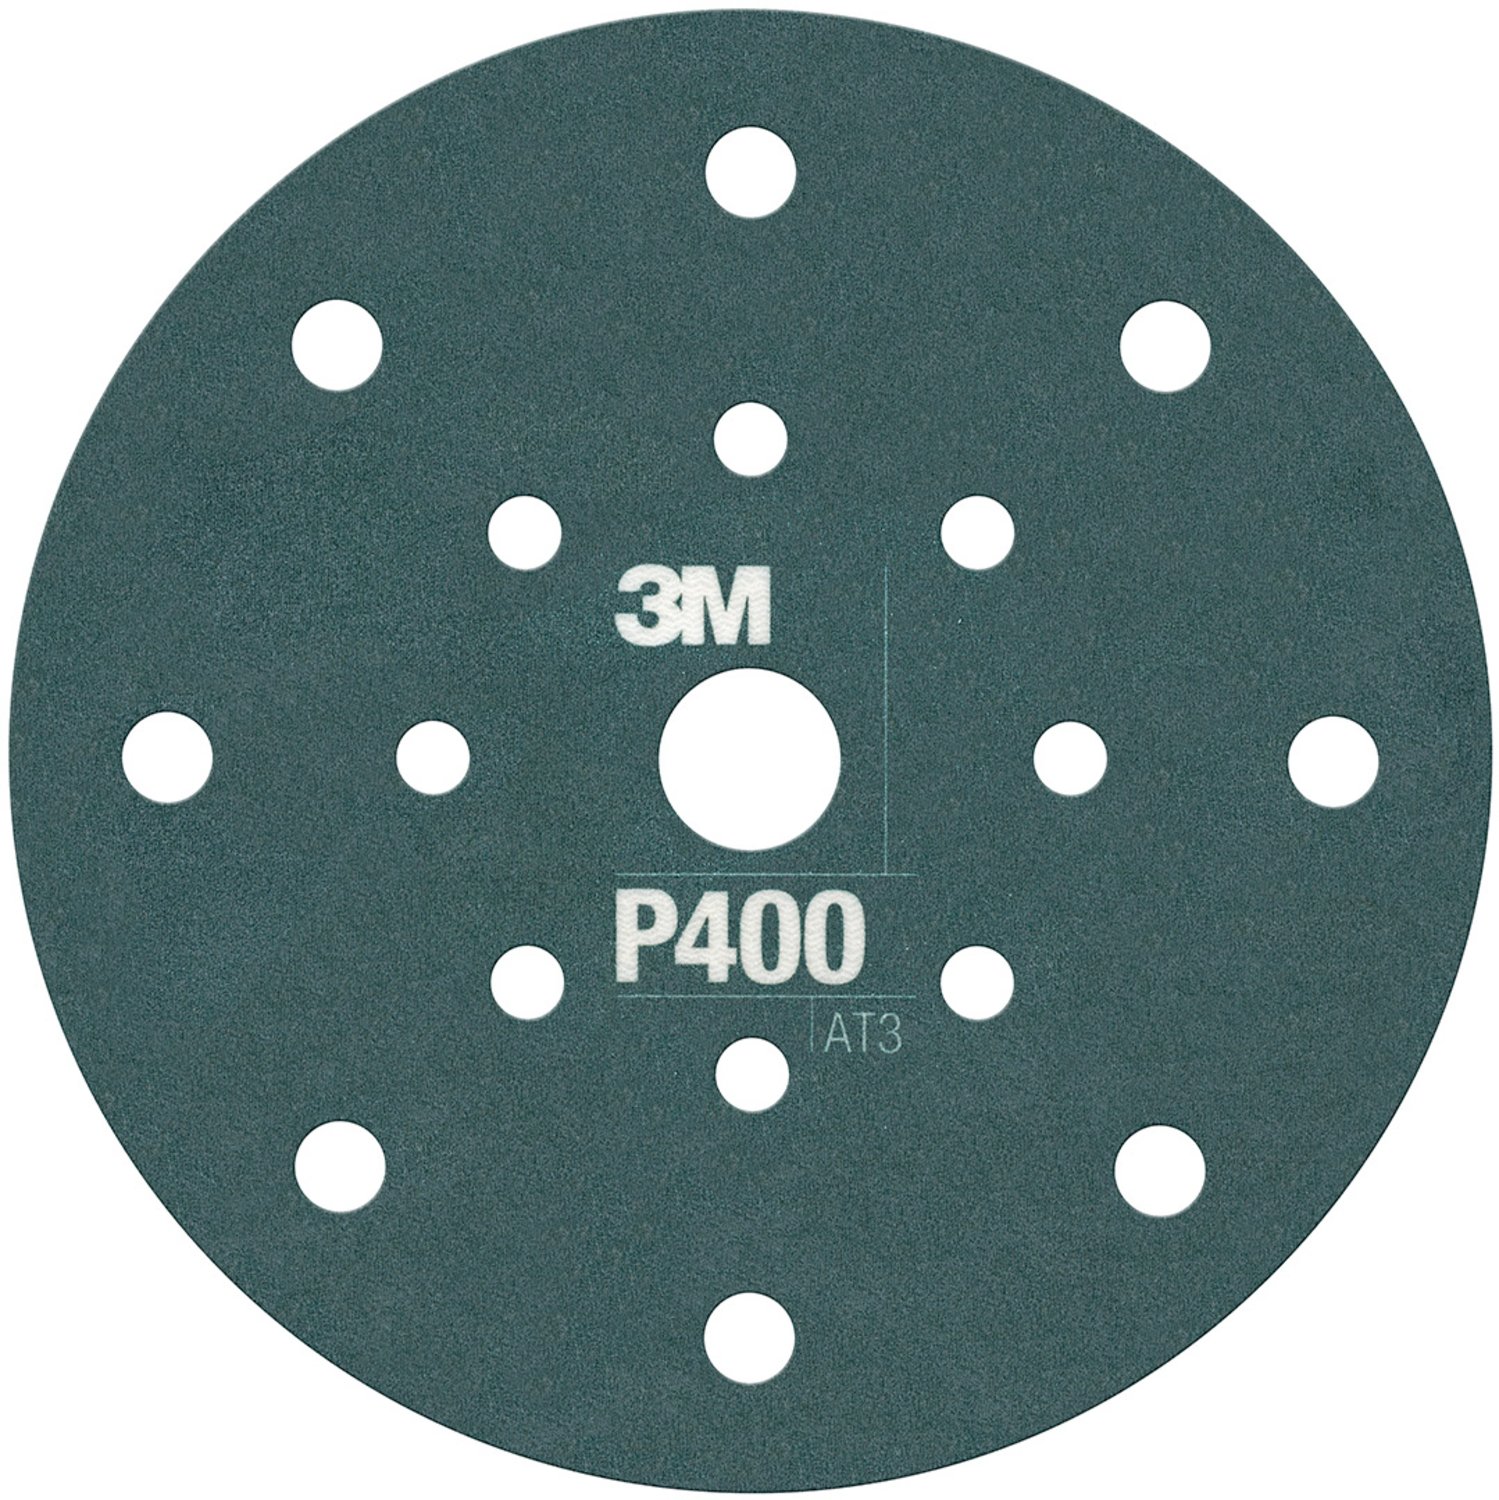 7100104547 - 3M Hookit Flexible Abrasive Disc 270J, 34800, 6 in, Dust Free, P400,
25 discs per carton, 5 cartons per case